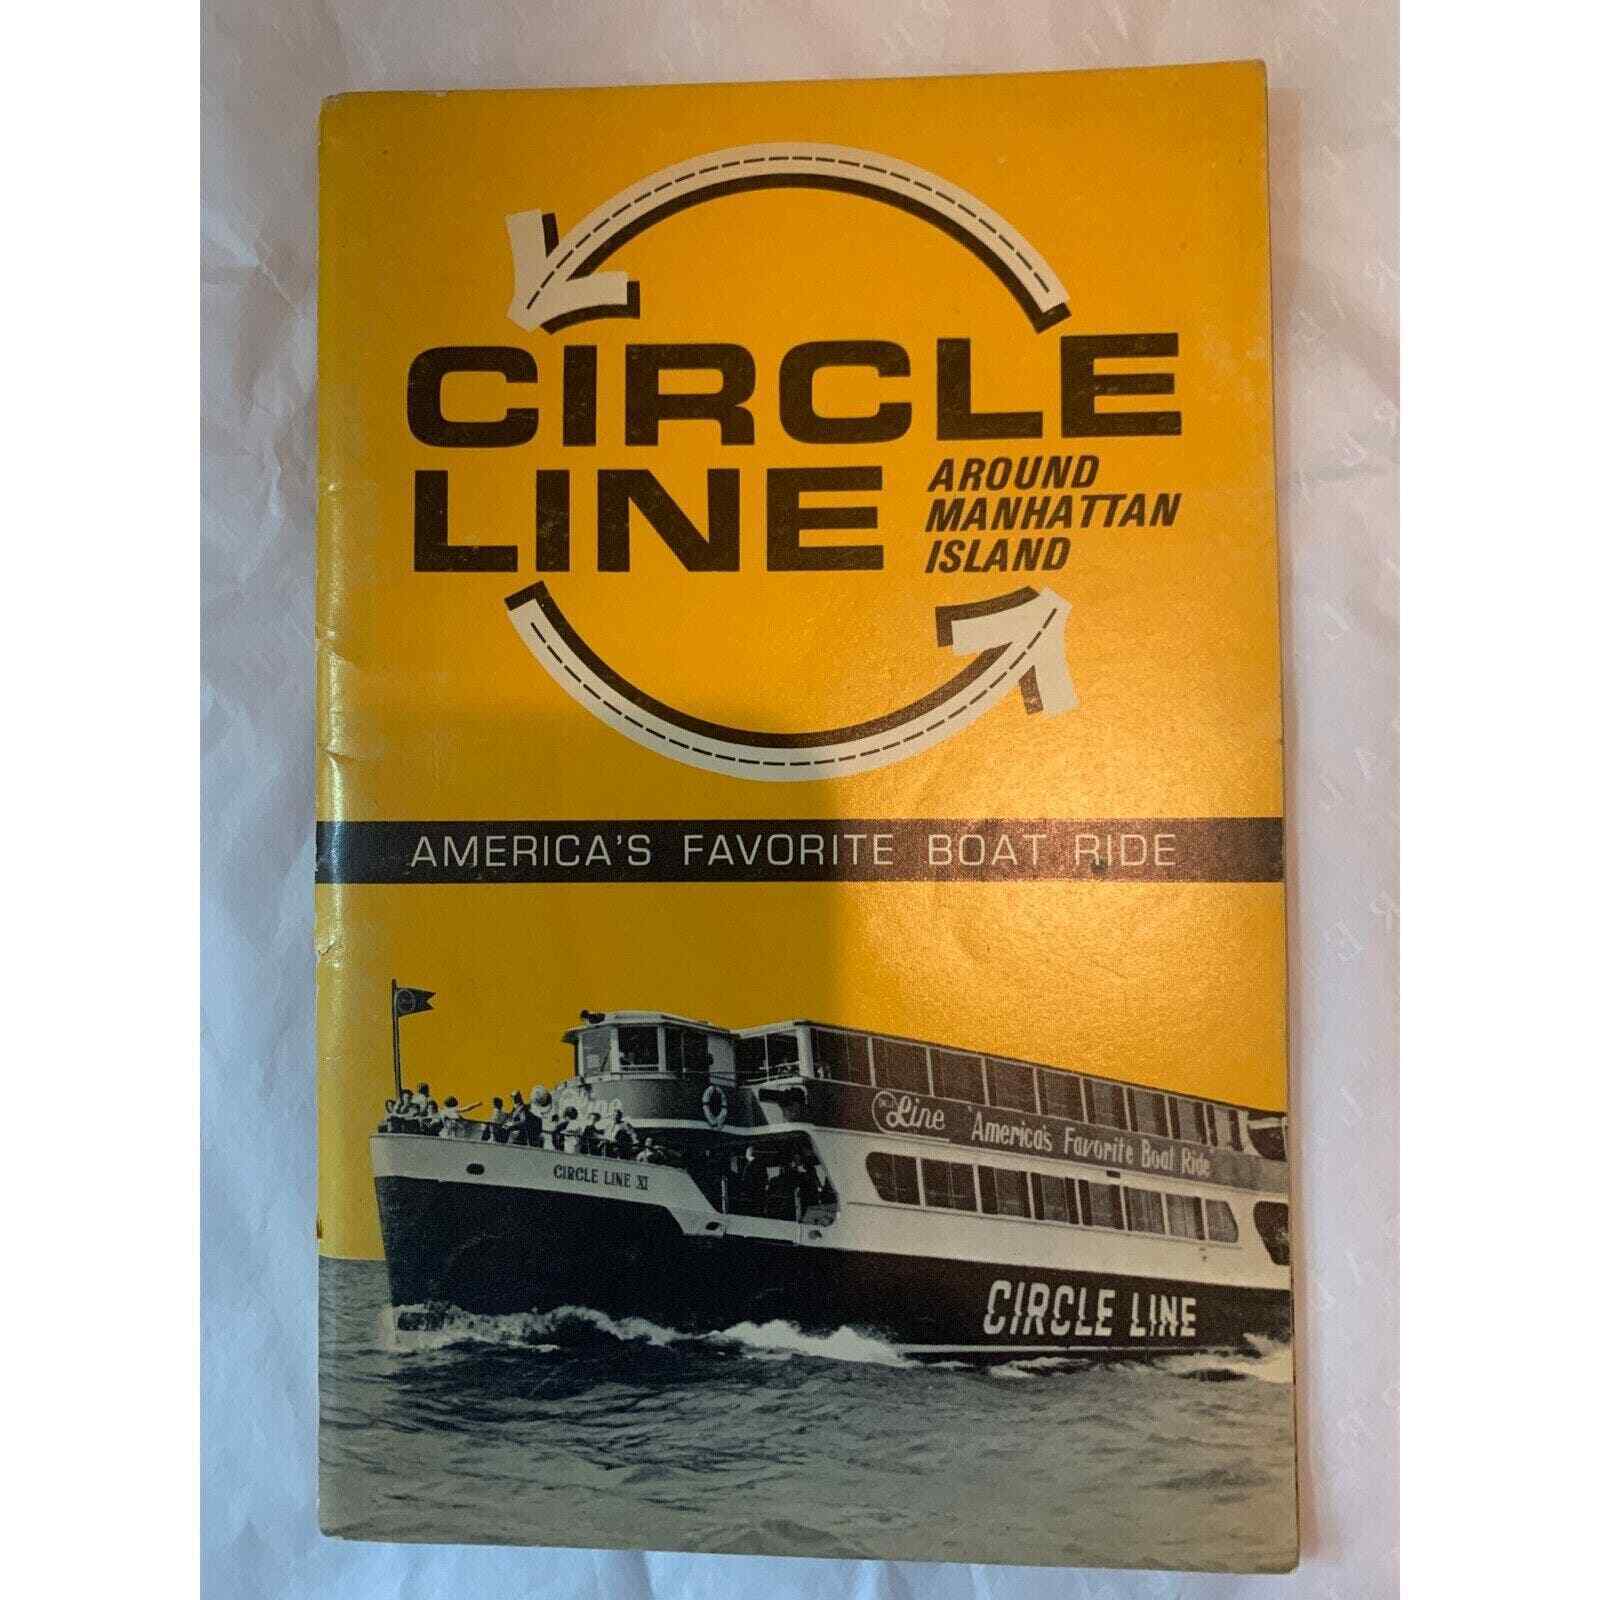 1966 CIRCLE LINE Boat Ride Cruise Around Manhattan Island NYC Program Booklet